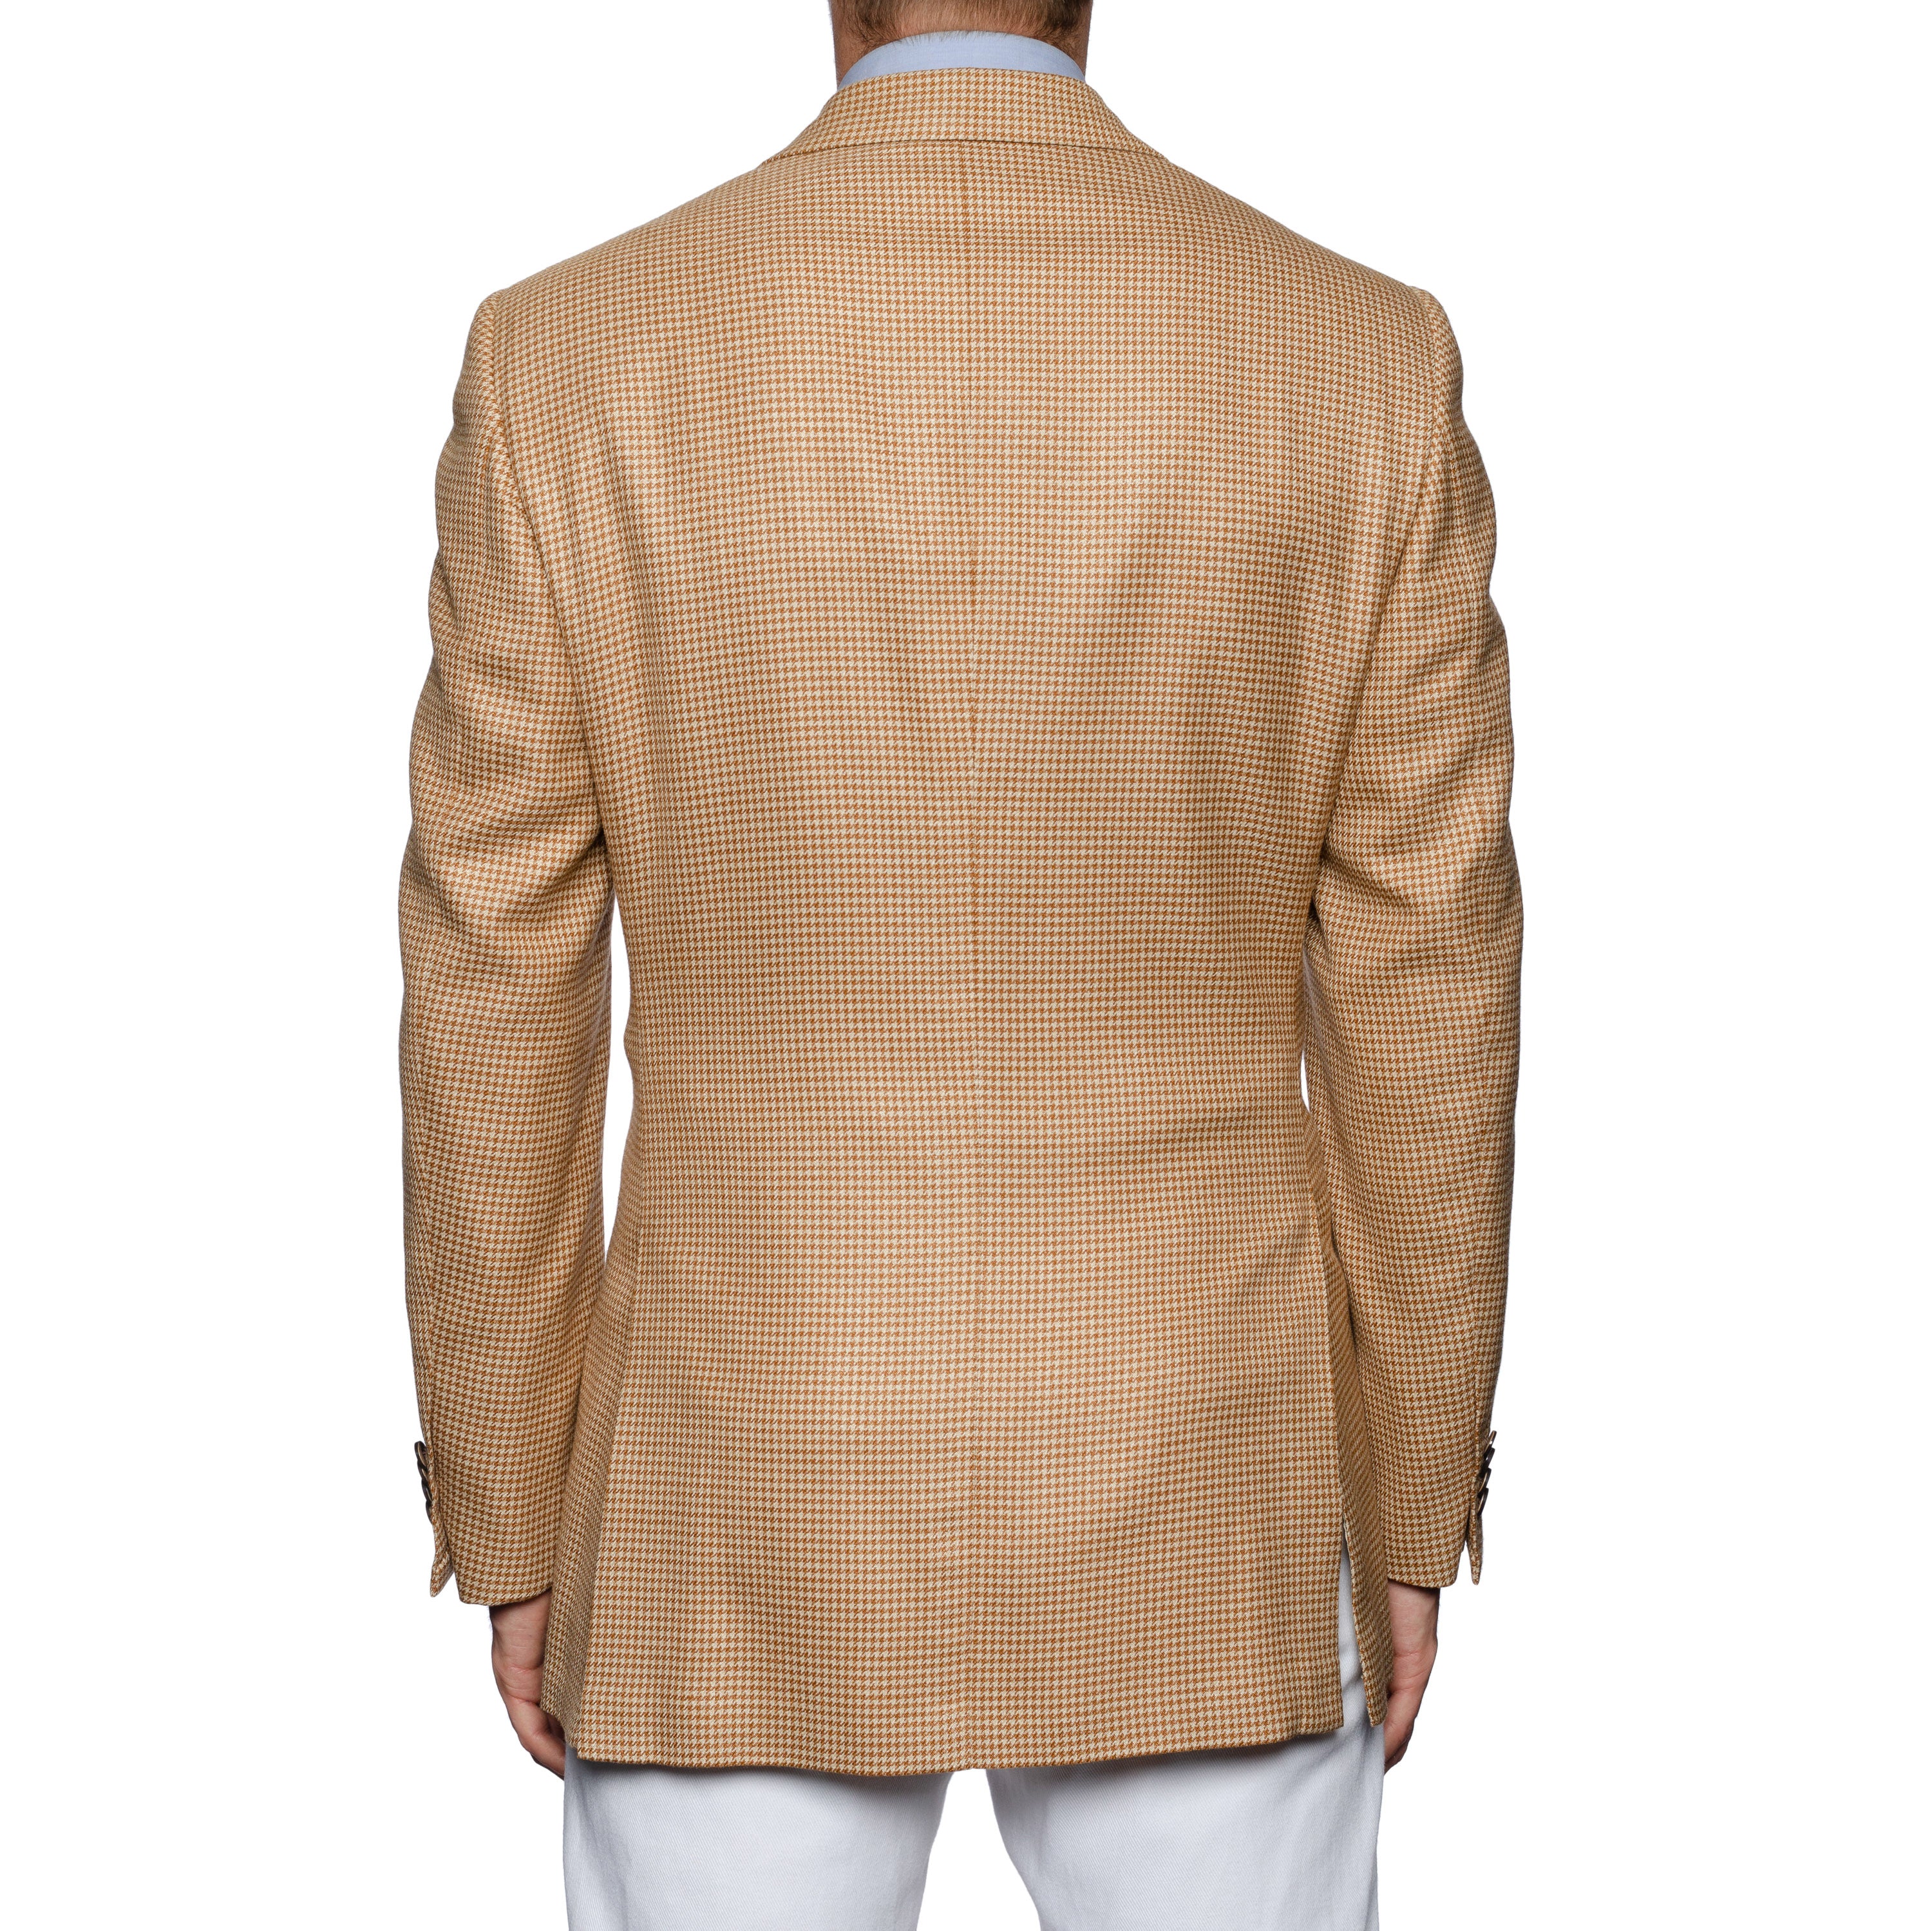 SARTORIA CASTANGIA Tan Houndstooth Silk-Wool Super 100's Jacket 52 NEW US 42 CASTANGIA